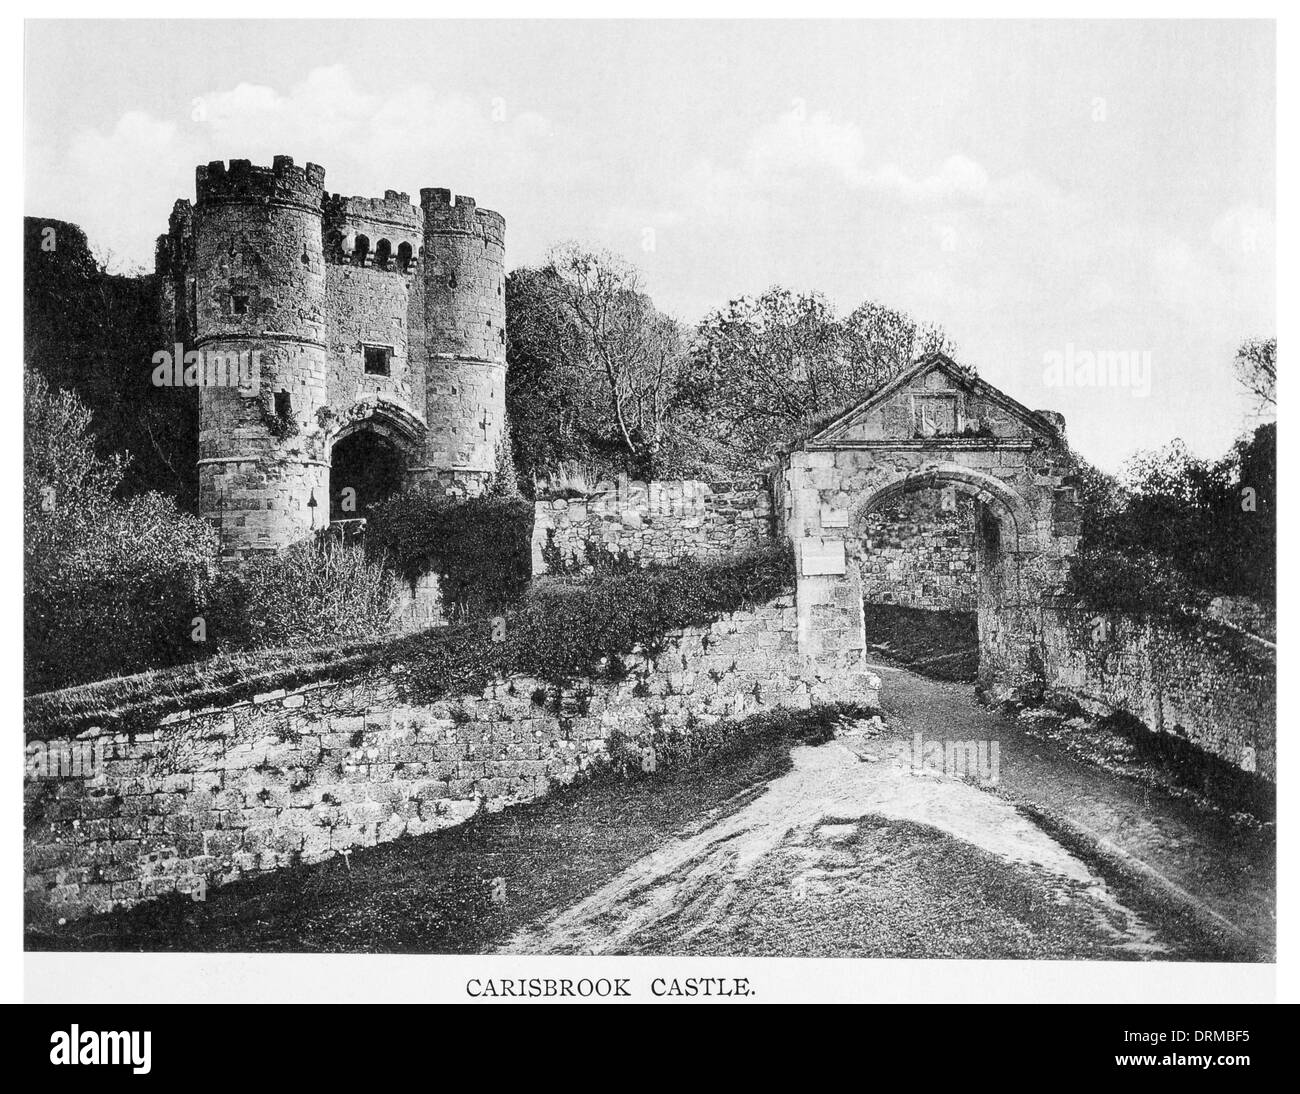 Carisbrook Castle Insel Whight Charles 1. ich Motte und Bailey Fort Lote Reiten Turm Graben Tor Haus fotografiert Circa 1910 Stockfoto